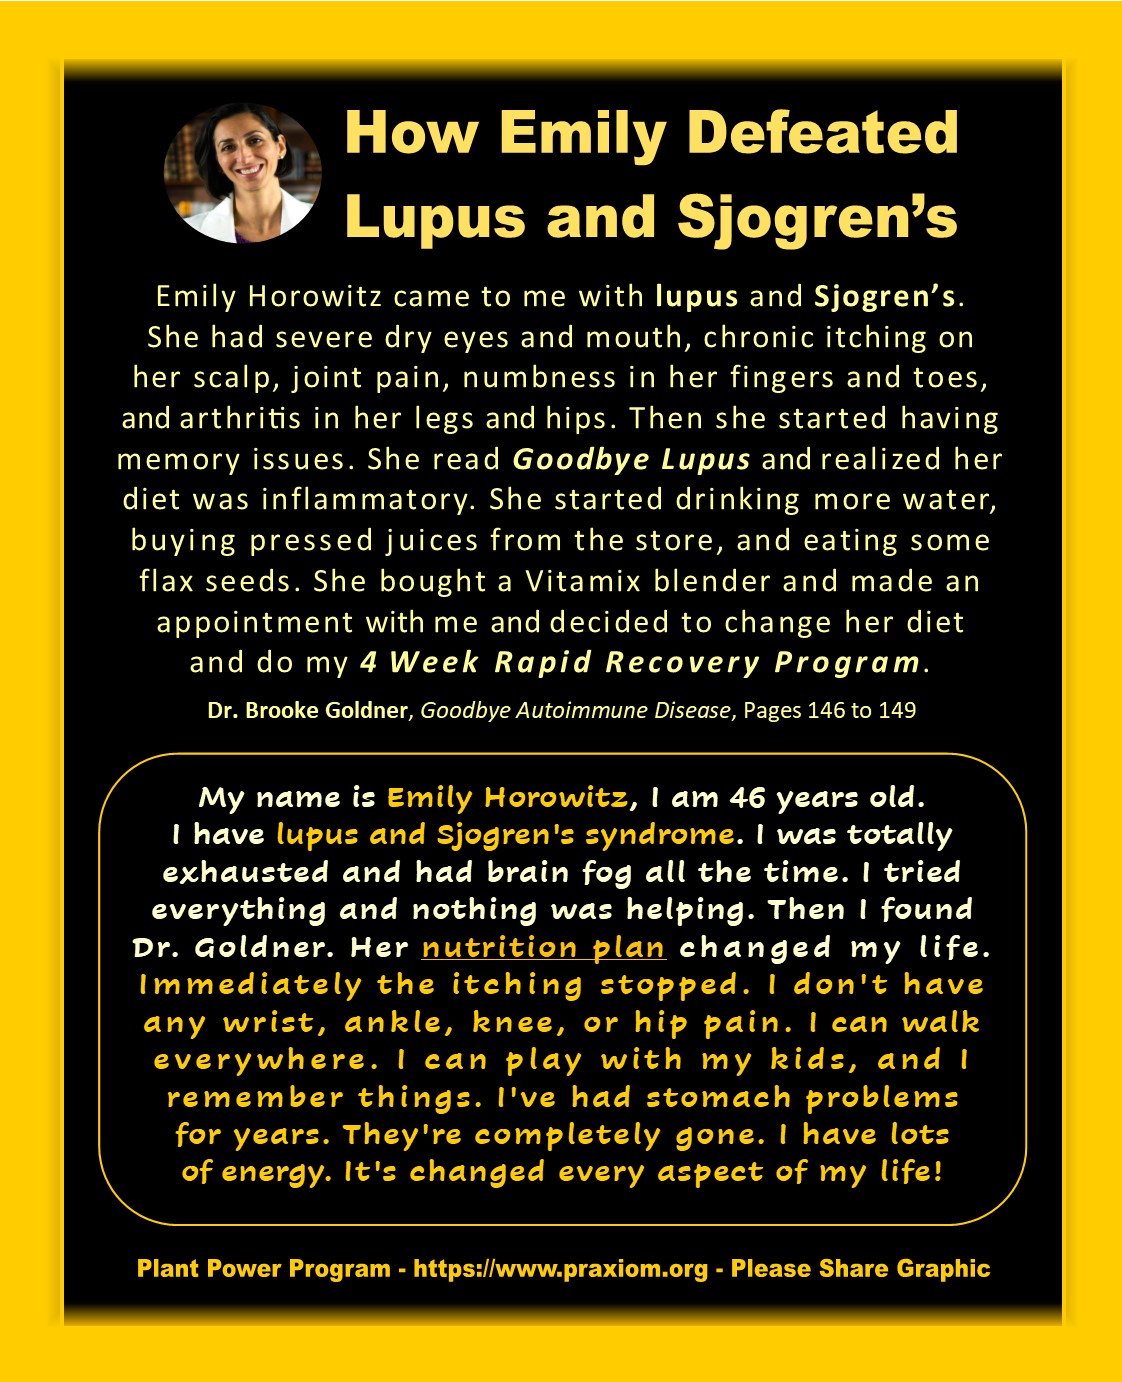 How Emily Horowitz Defeated Lupus and Sjogren's Disease - Dr. Brooke Goldner